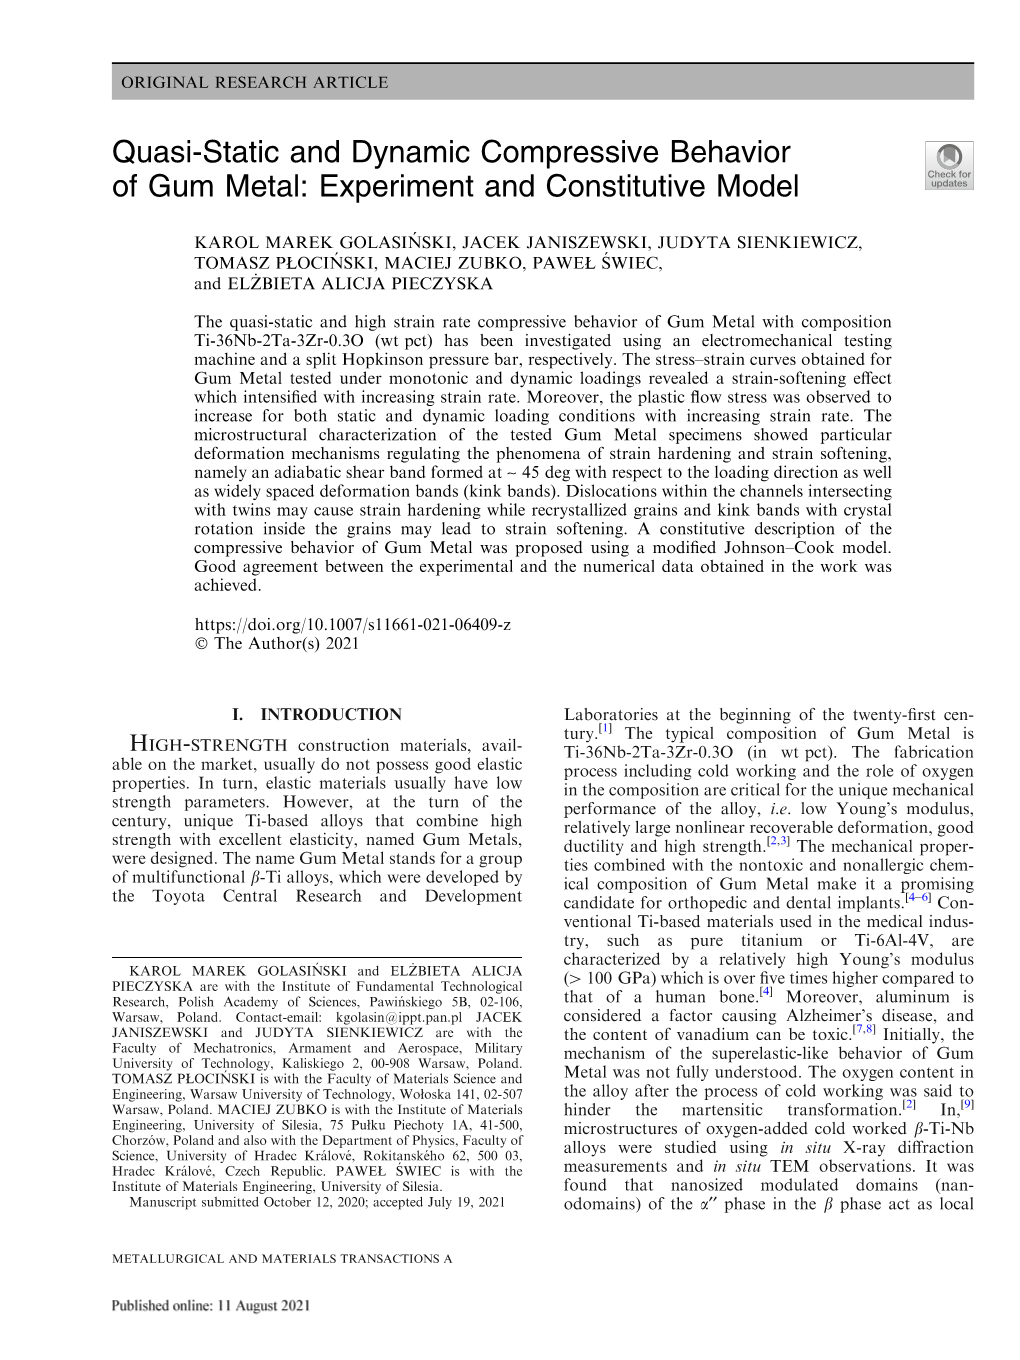 Quasi-Static and Dynamic Compressive Behavior of Gum Metal: Experiment and Constitutive Model